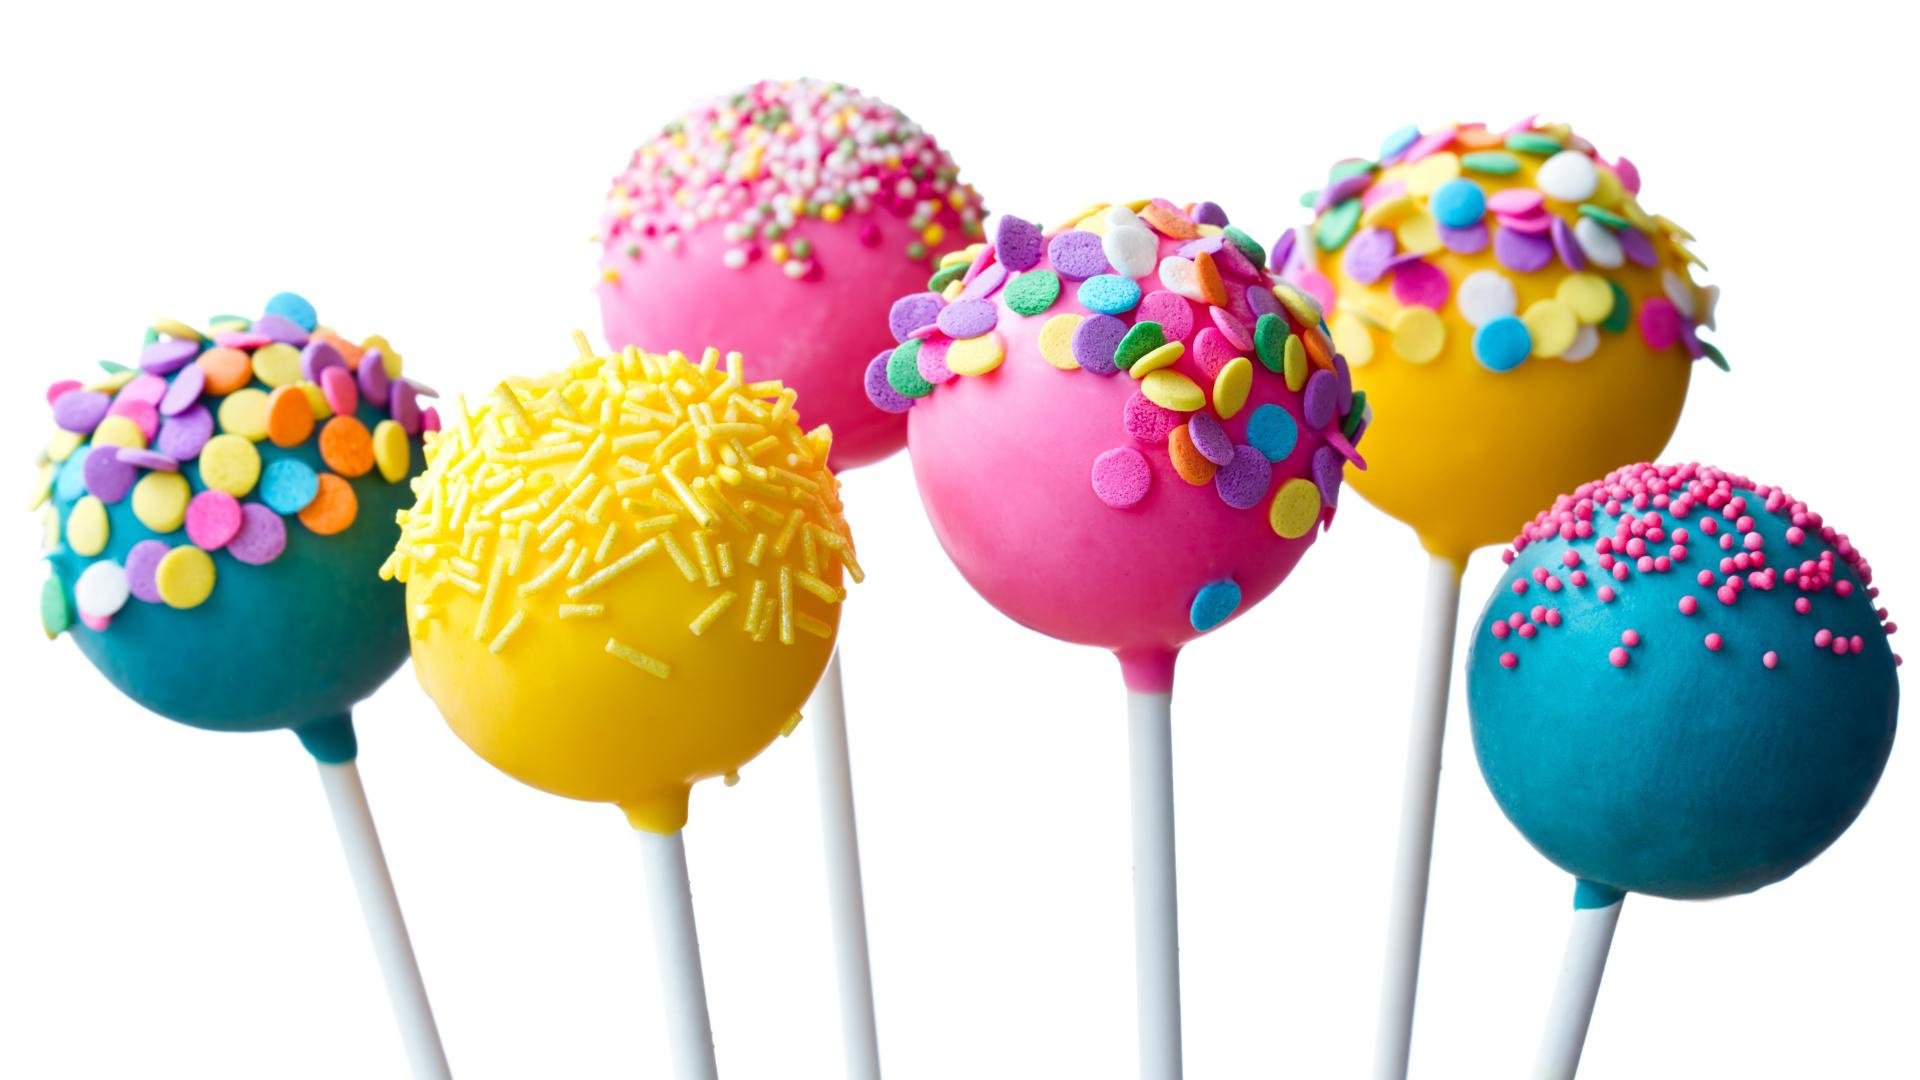 LG G2 South Korea Gets Android 5.0 Lollipop